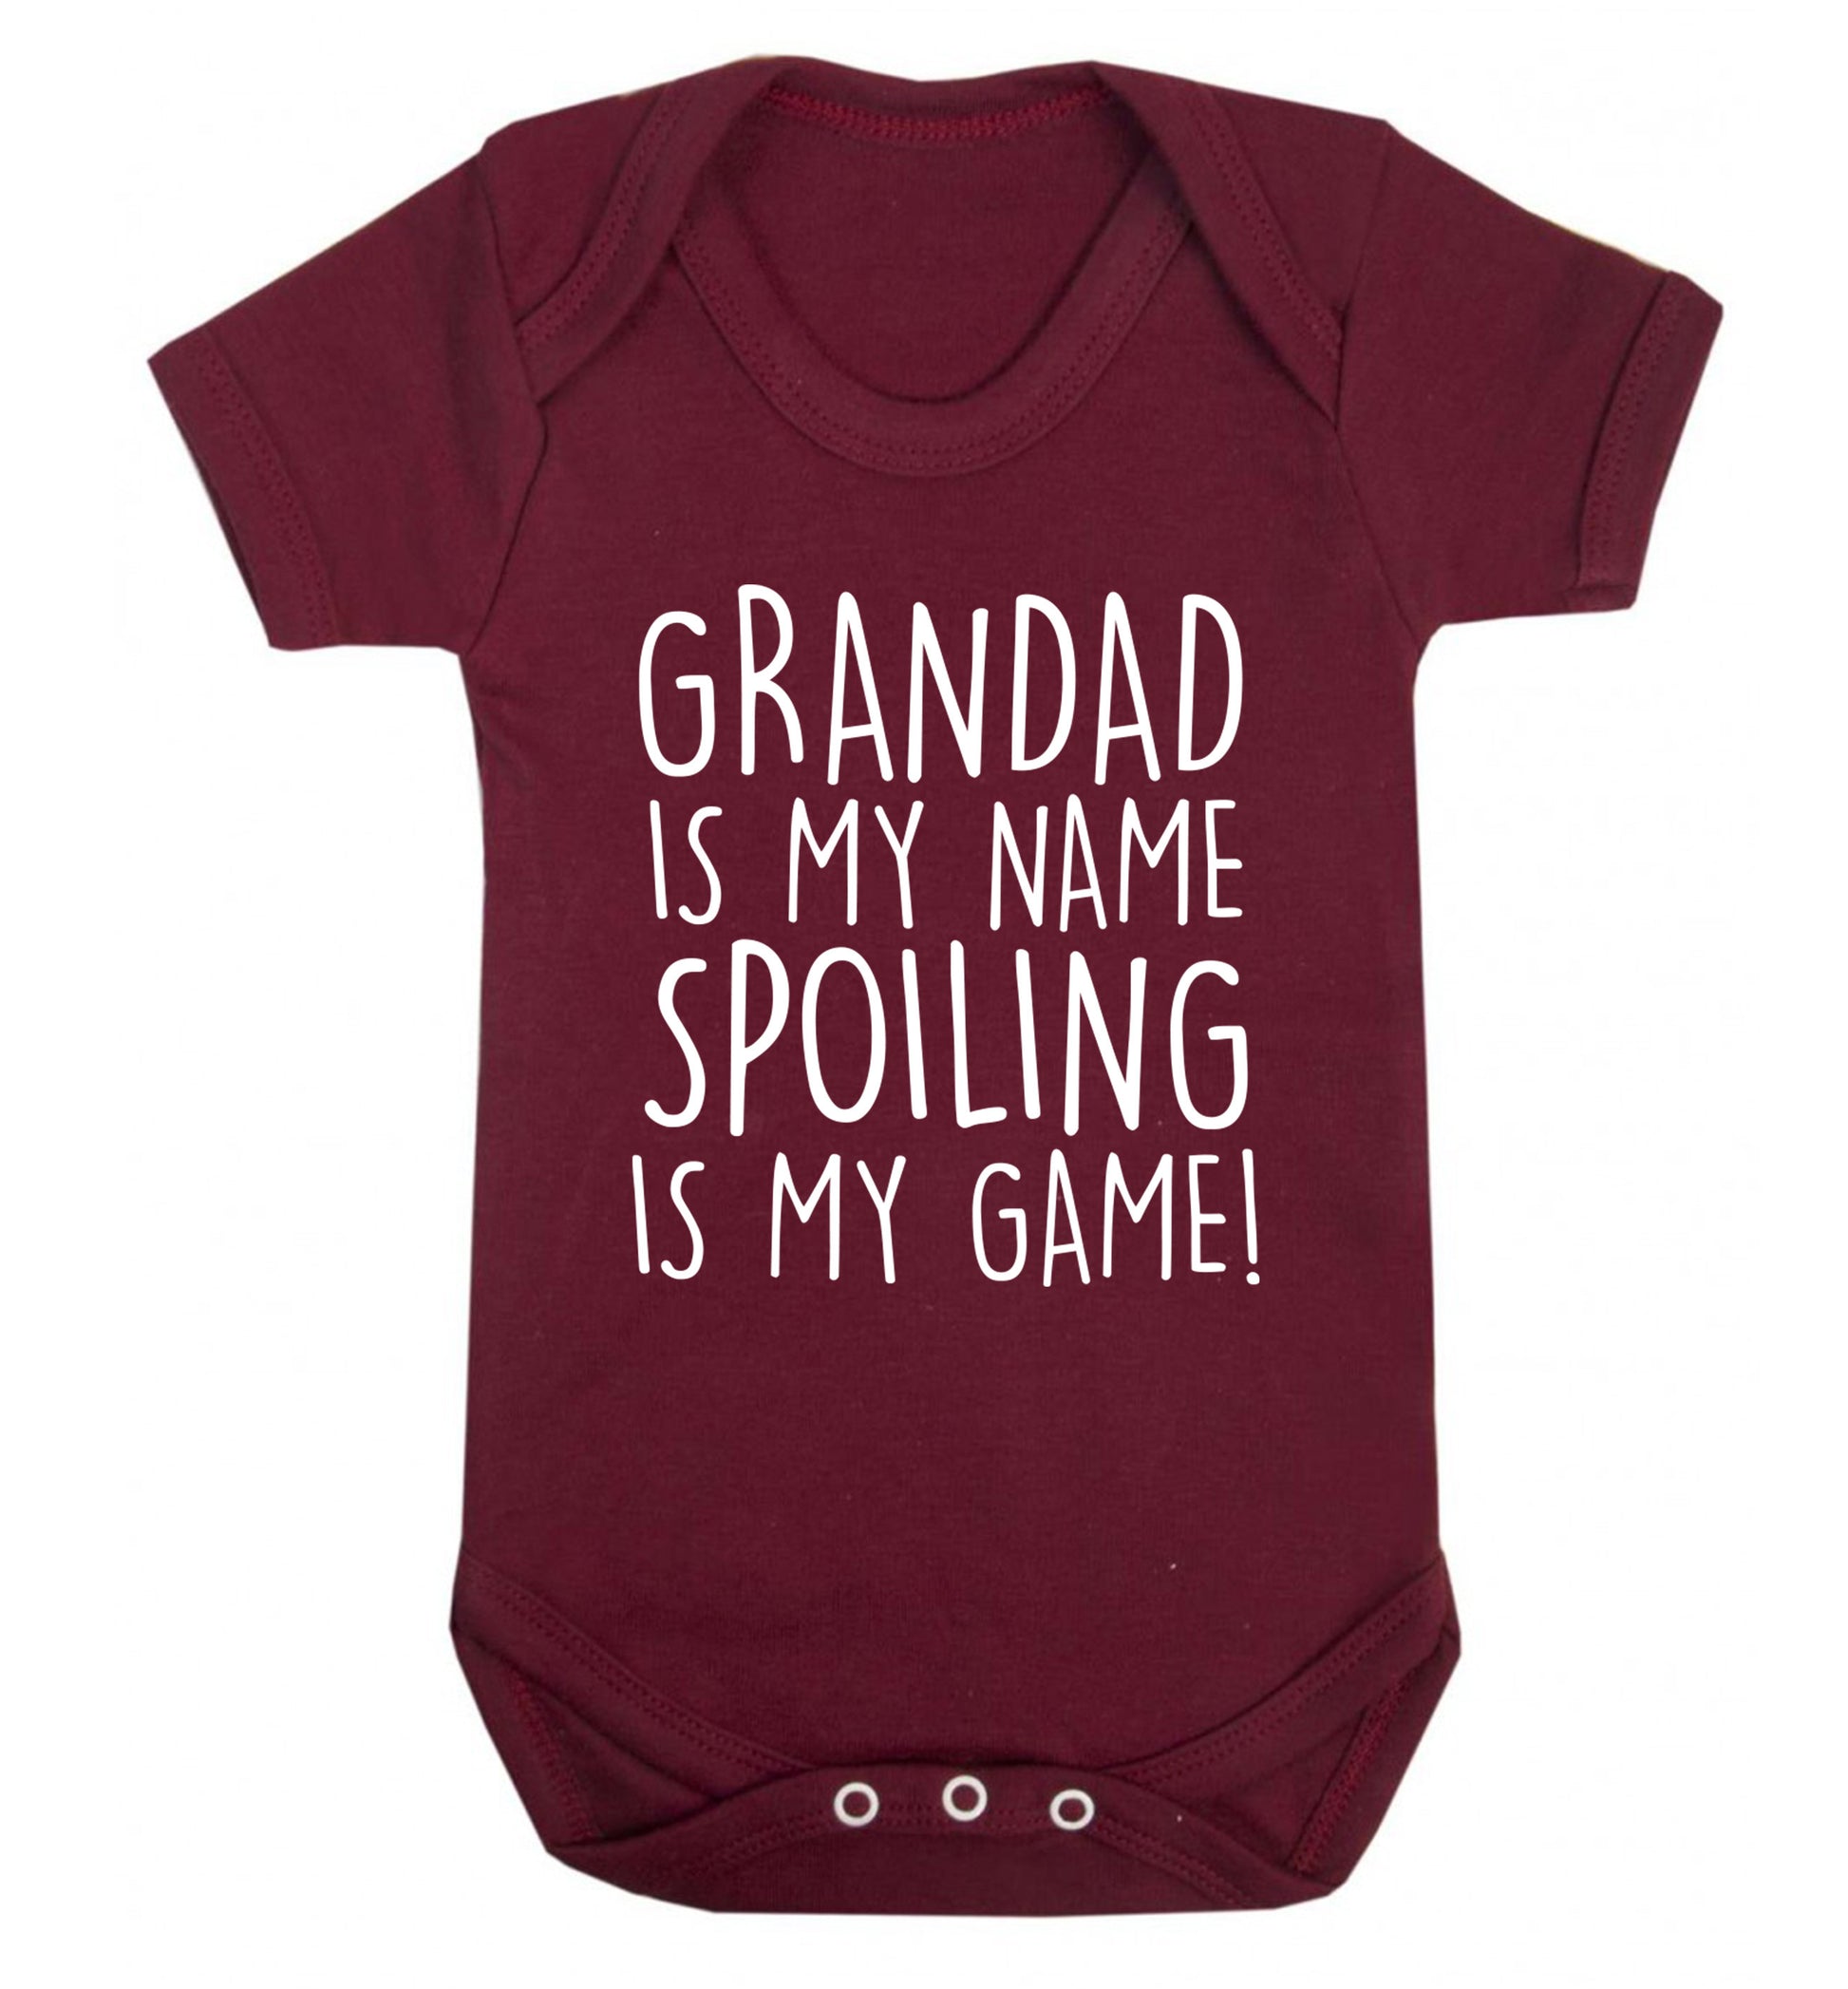 Grandad is my name, spoiling is my game Baby Vest maroon 18-24 months